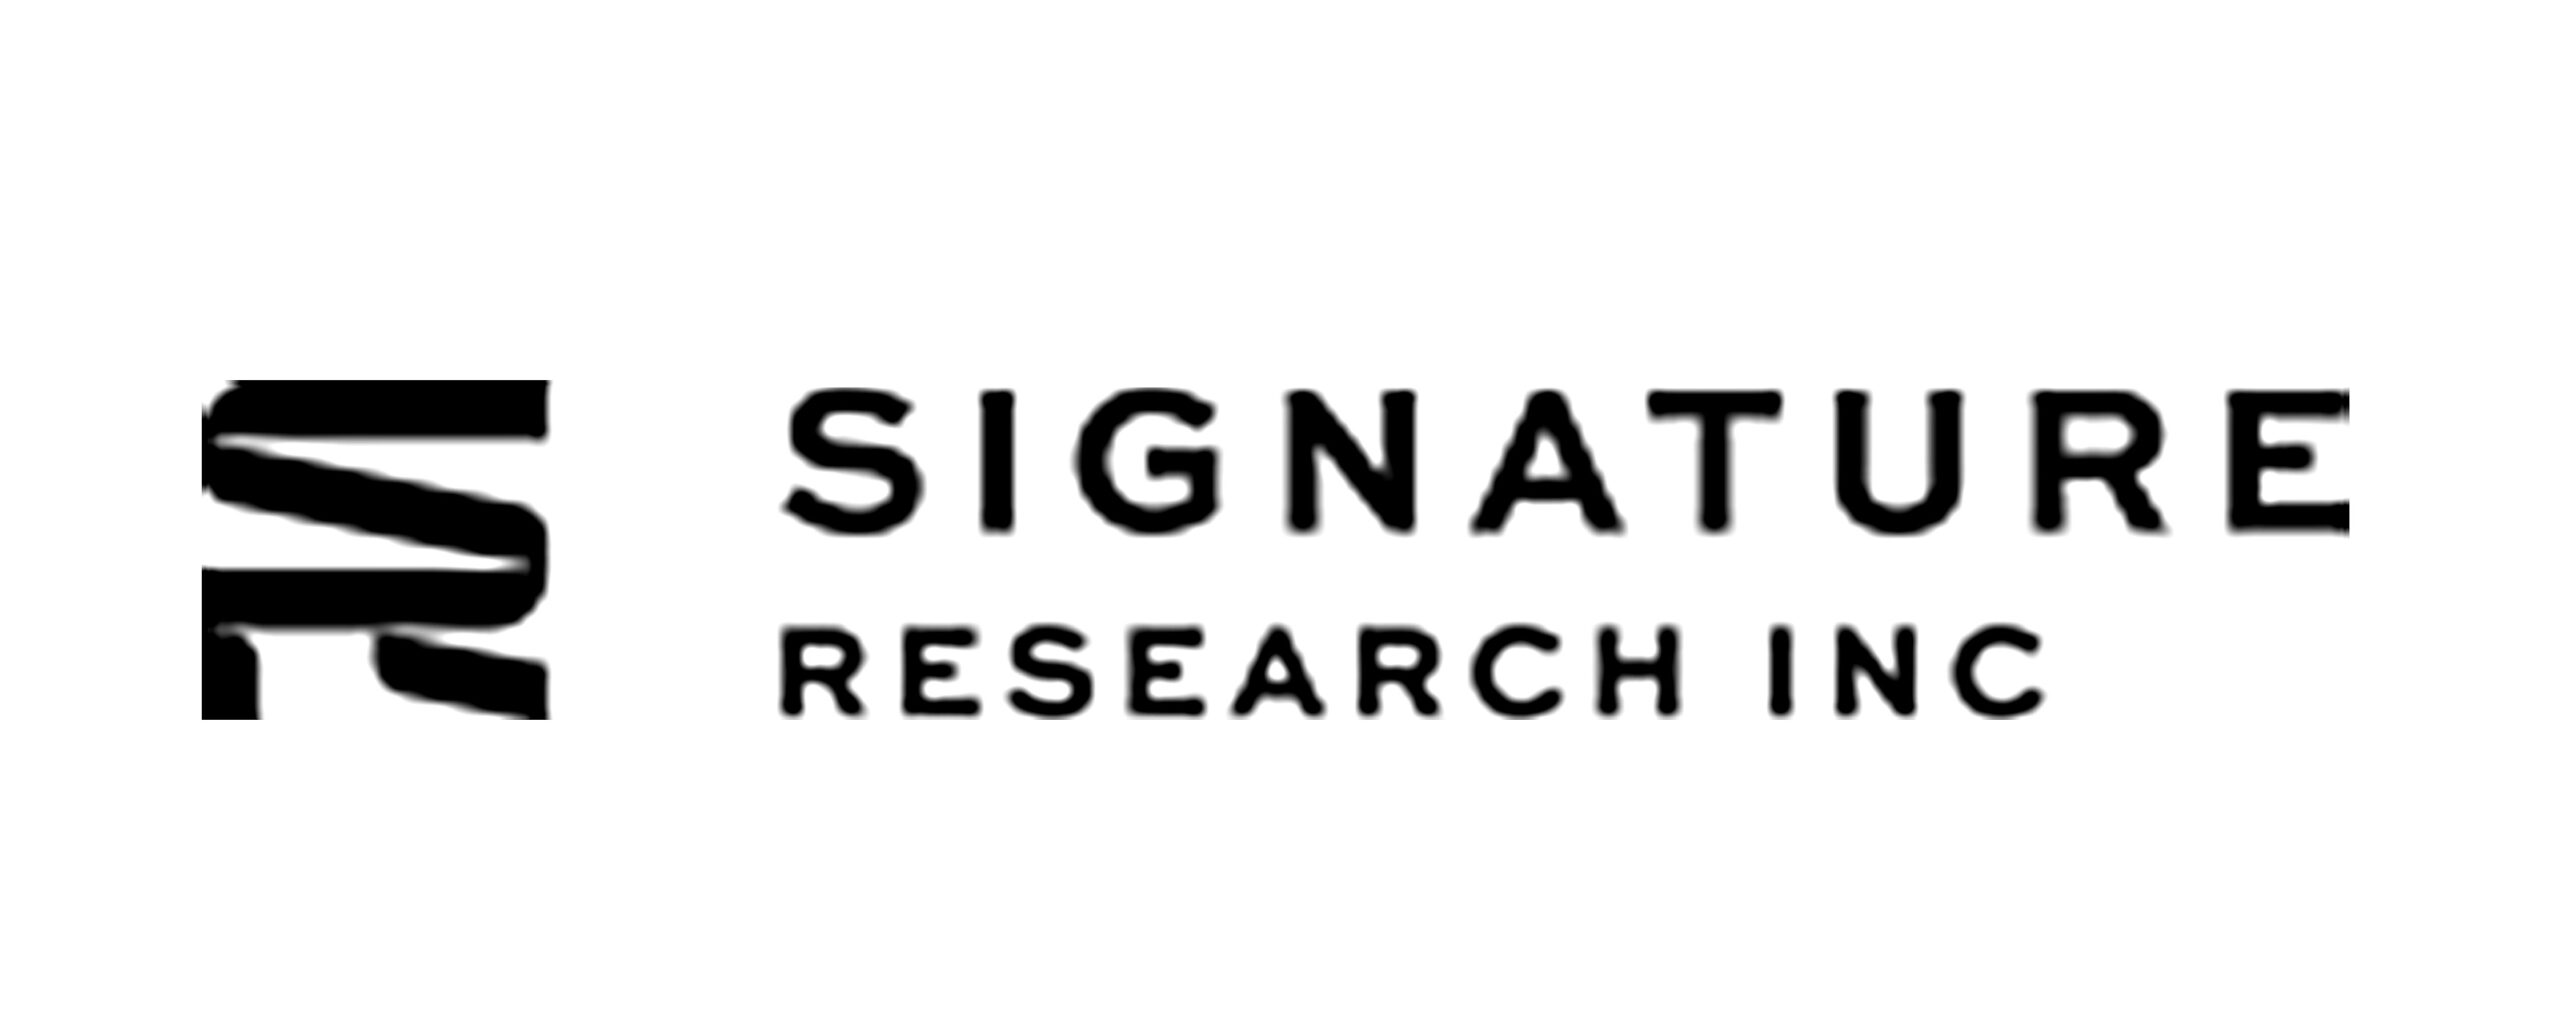 Signature Research, Inc.